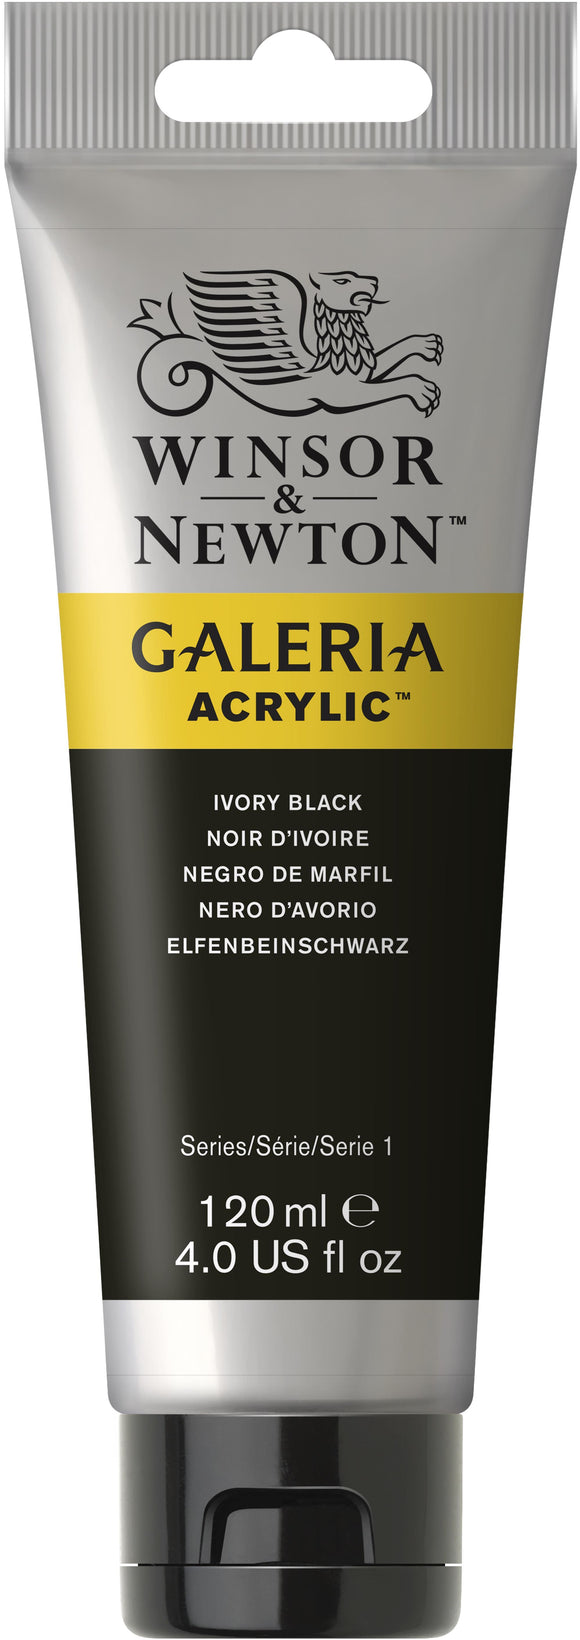 Winsor & Newton Galeria Acrylic Ivory Black 120Ml